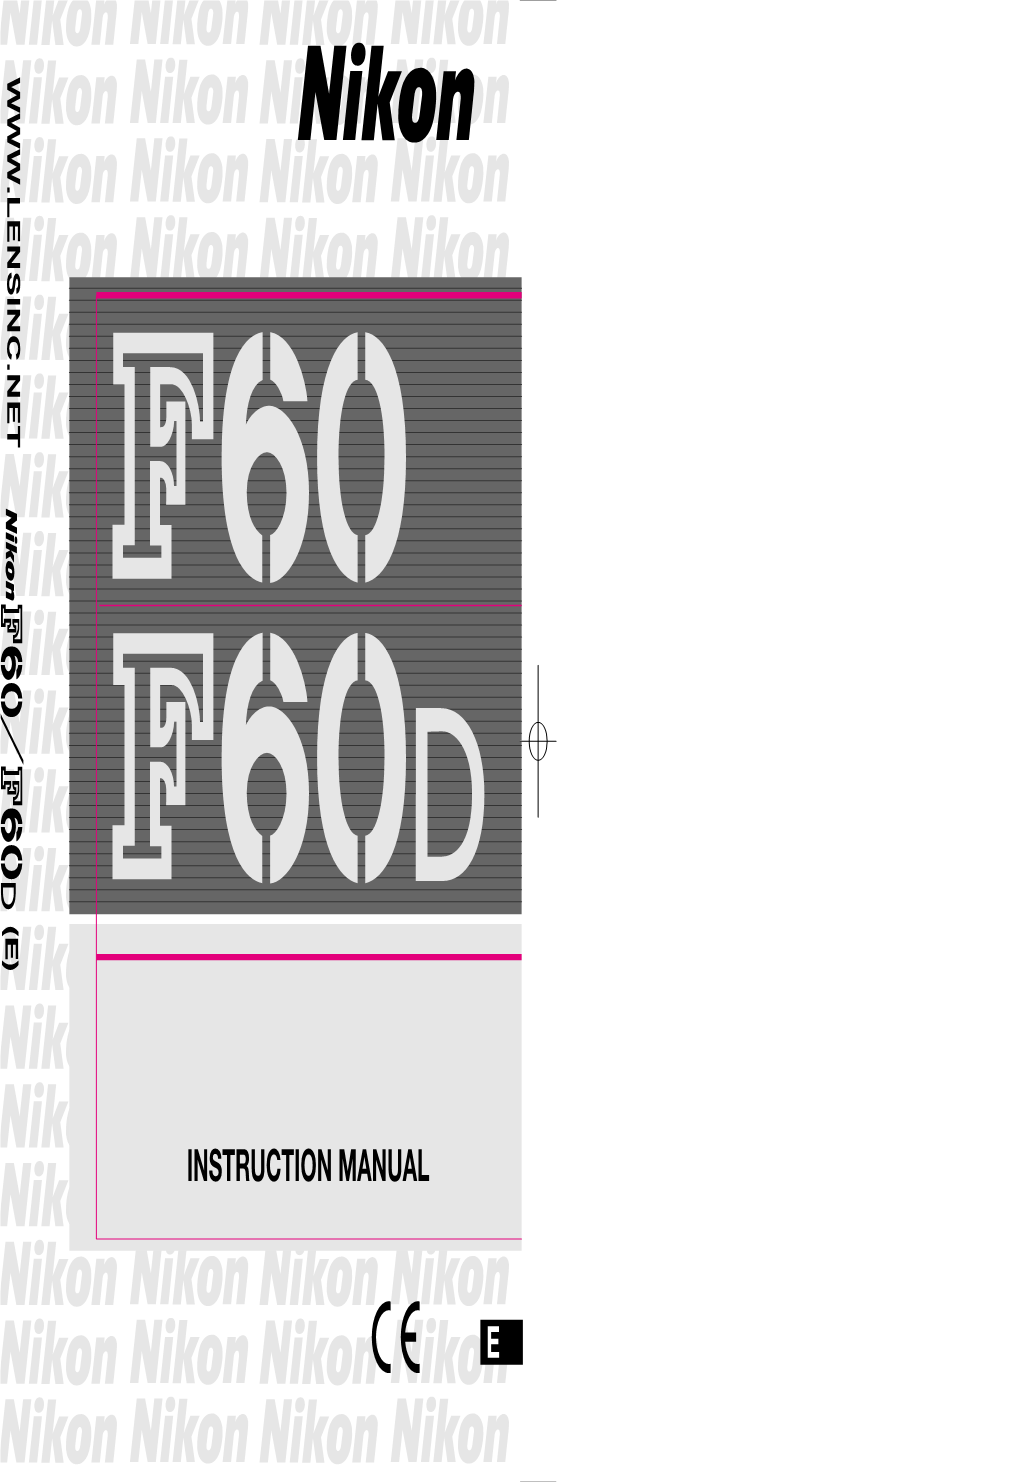 Nikon F60 Instruction Manual